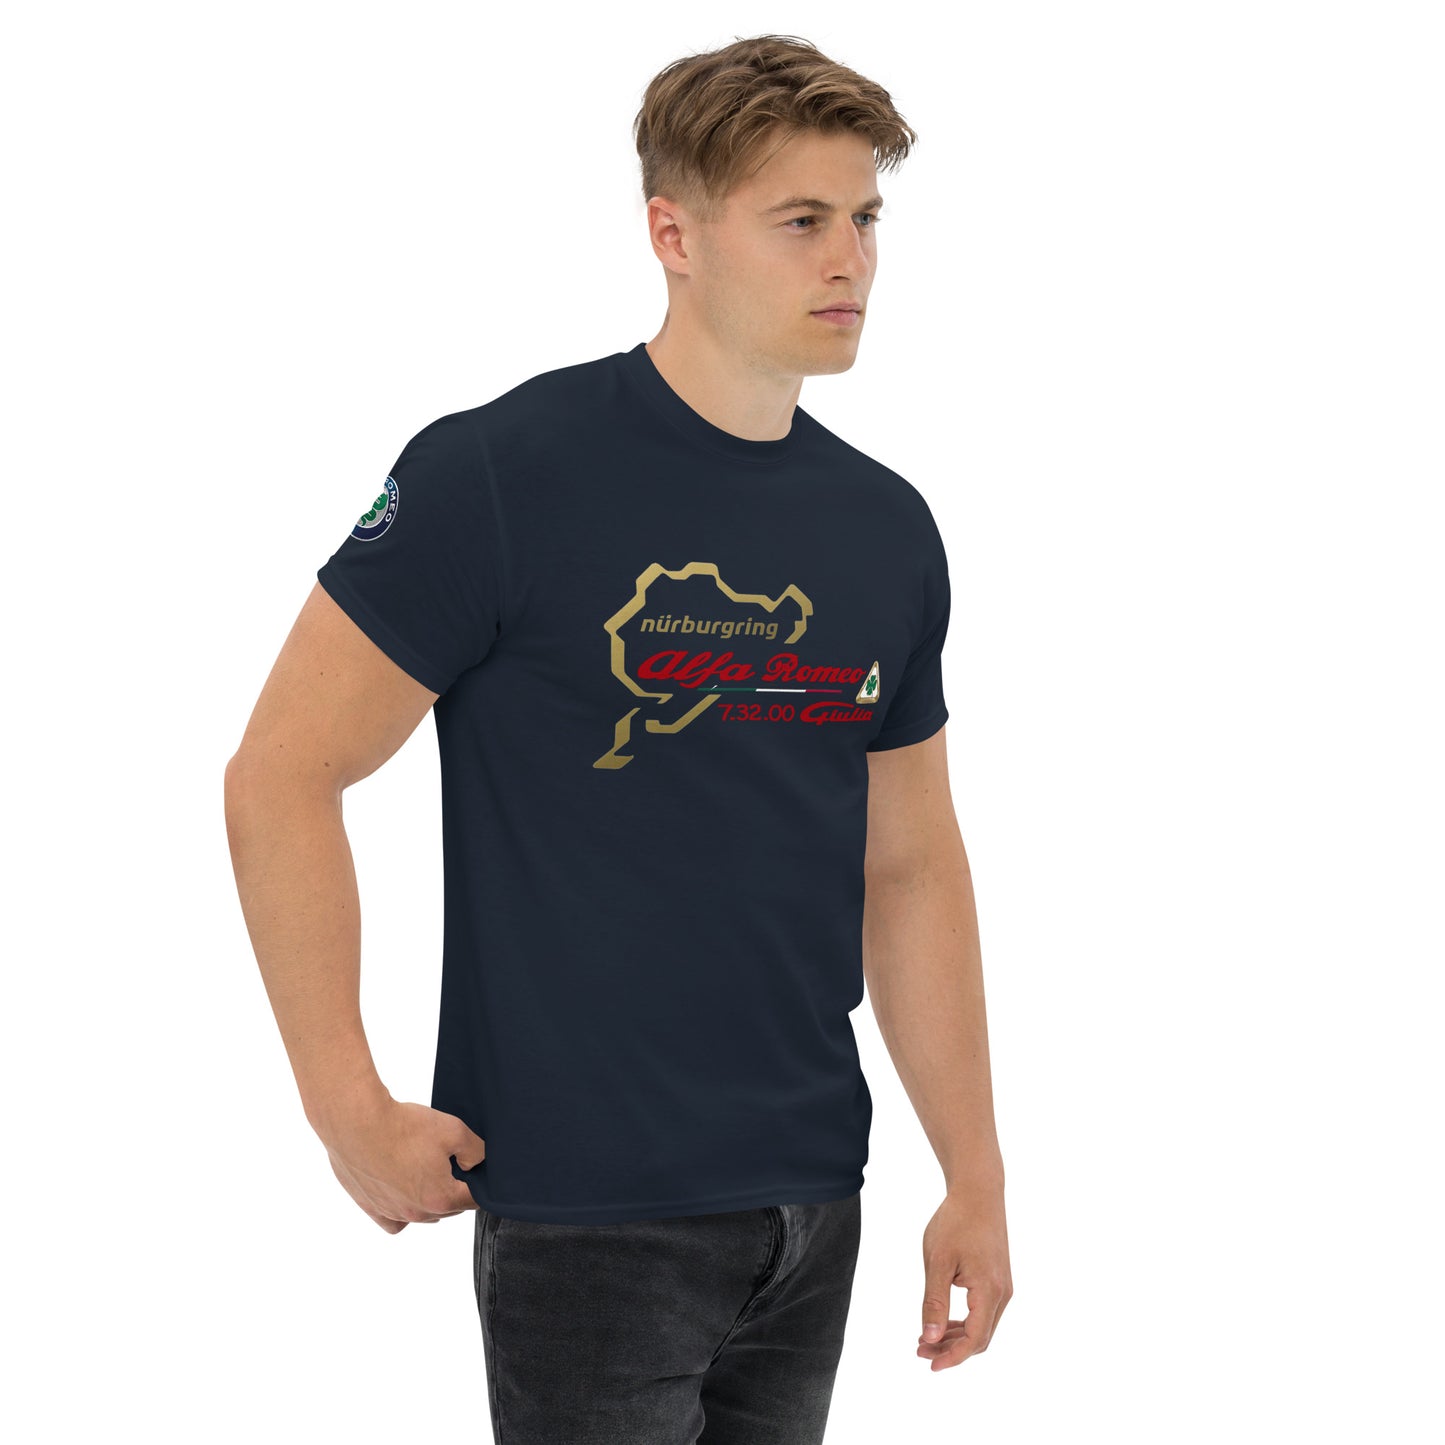 T-shirt Alfa Romeo record Nurburgring Giulia Quadrifoglio